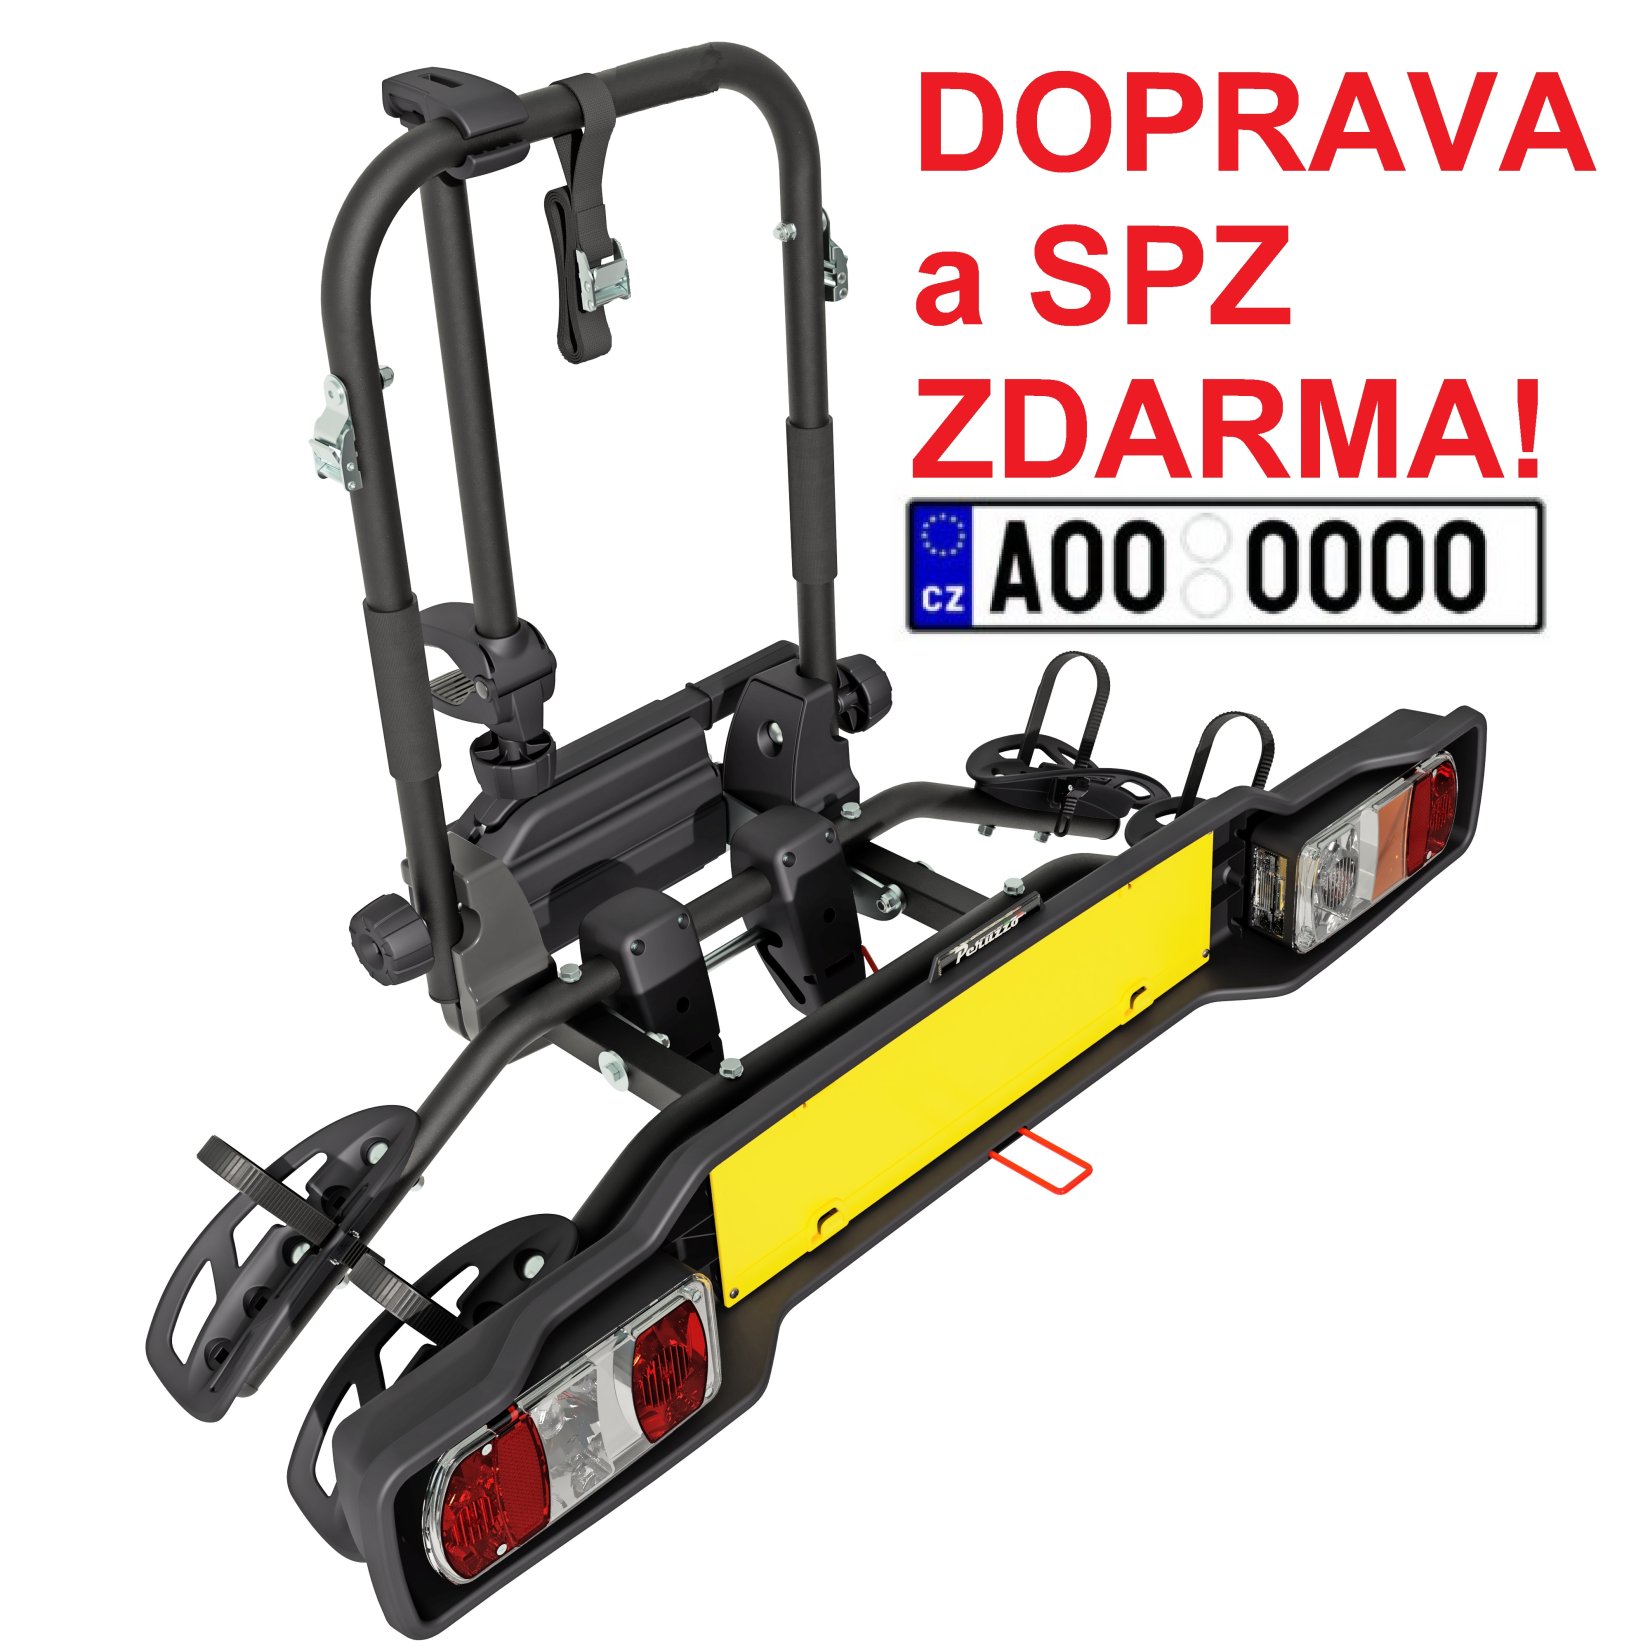 Nosič kol Peruzzo Parma 2 (černá) na tažné zařízení DOPRAVA A SPZ ZDARMA